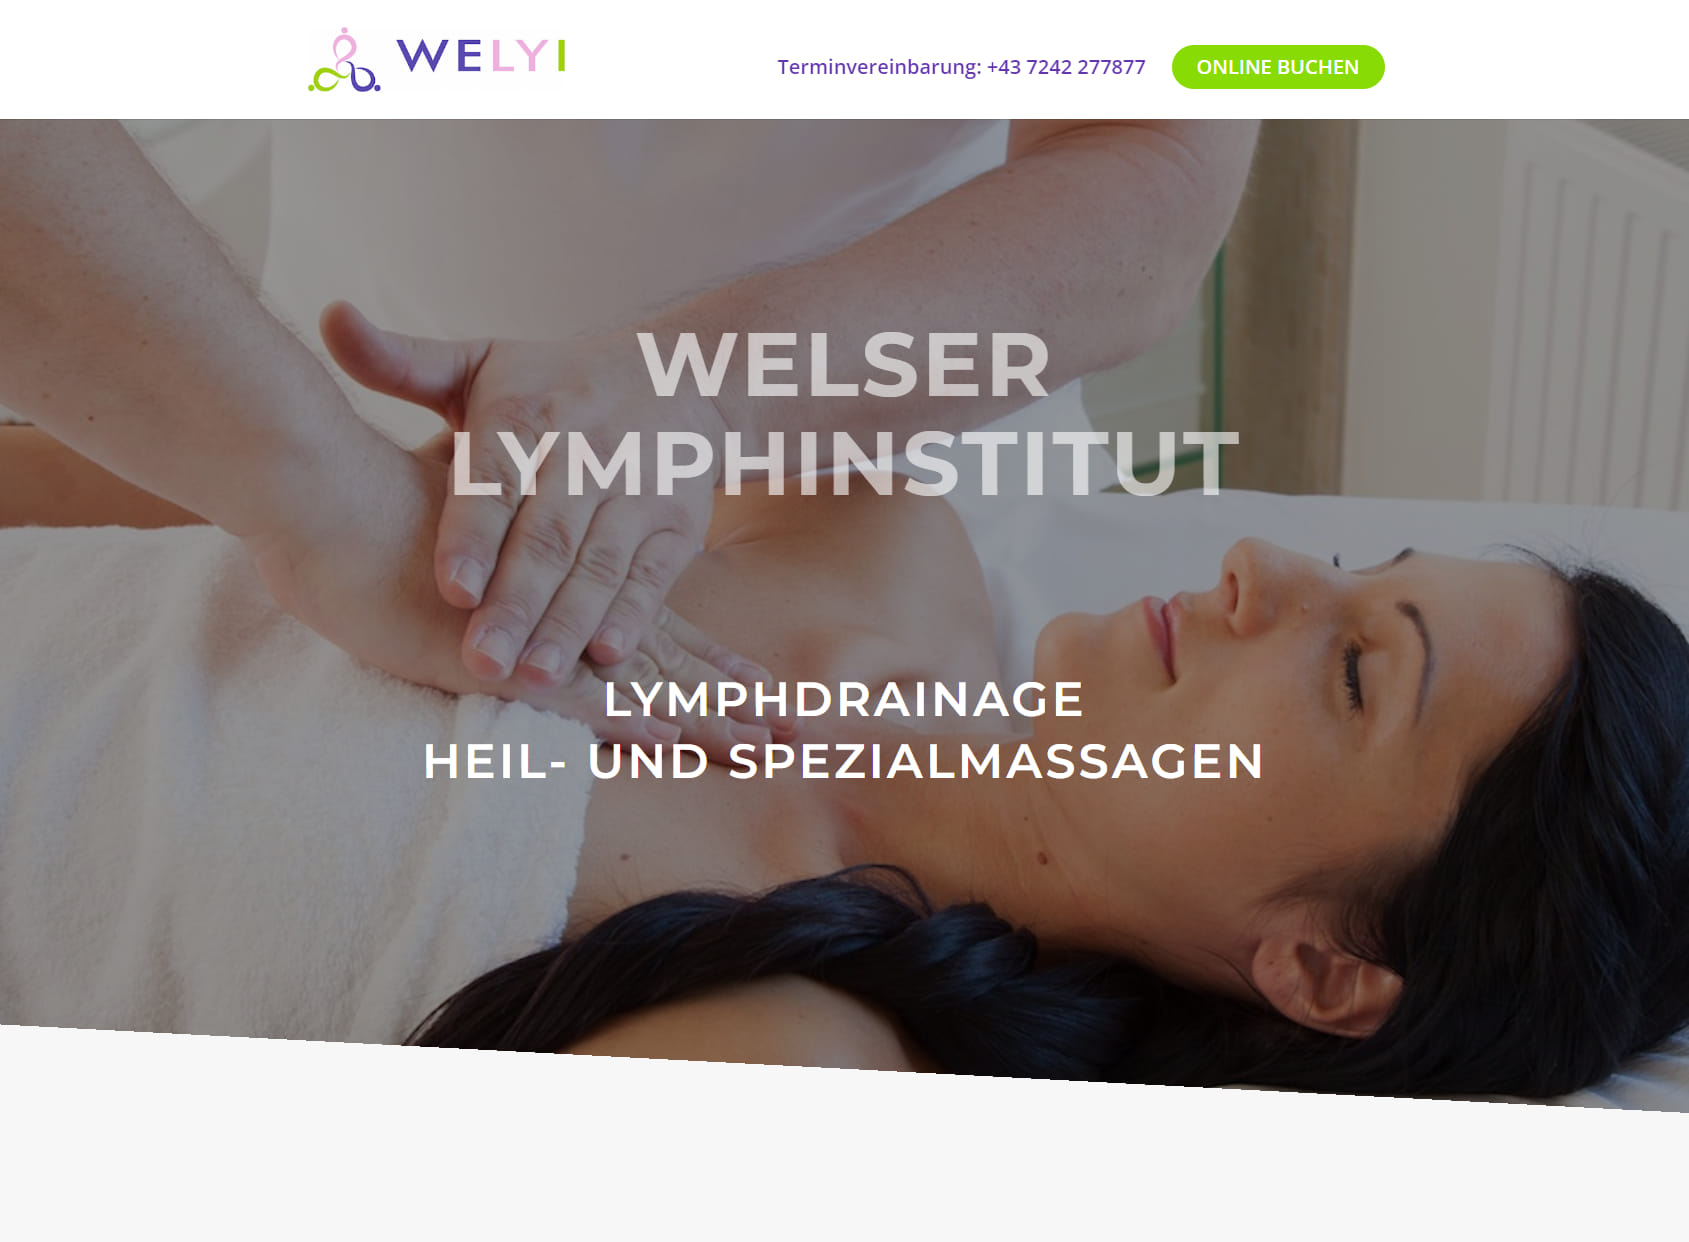 WELYI Welser Lymphinstitut (Lymphdrainage & Heilmassage)